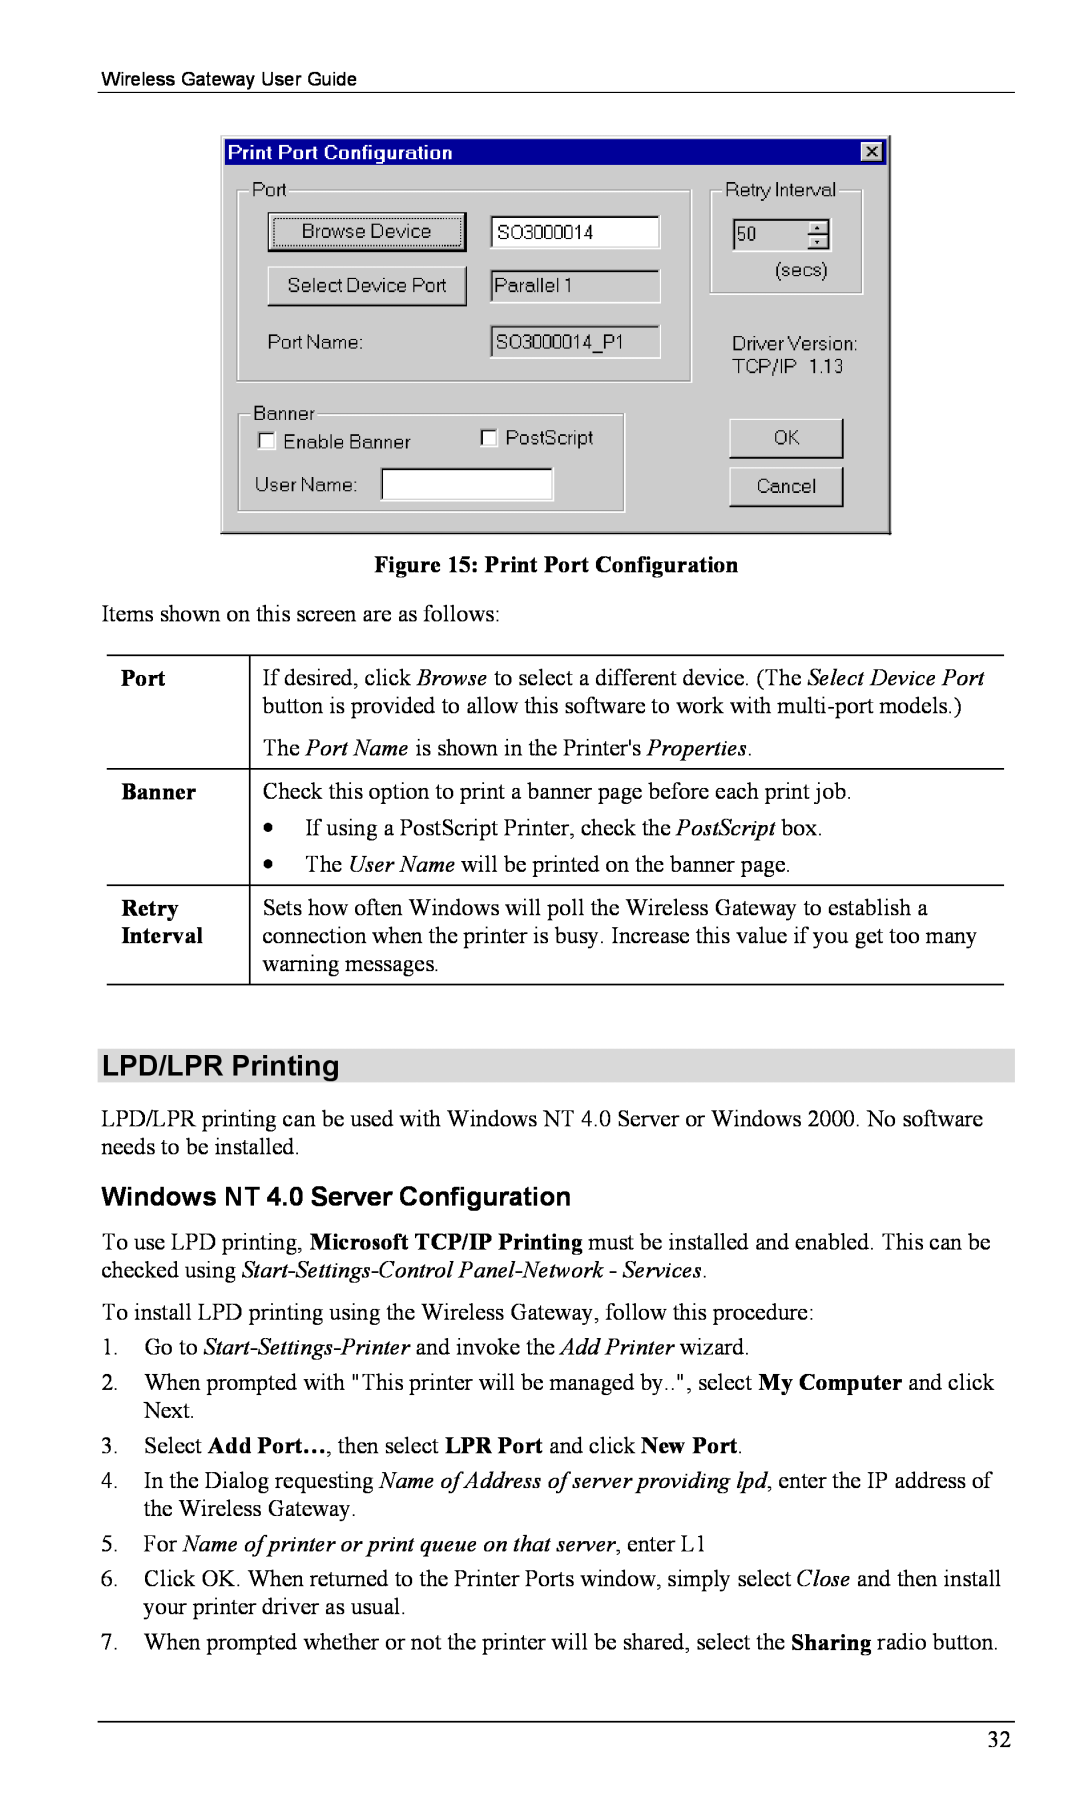 Milan Technology MIL-W0311, MIL-W1311 manual LPD/LPR Printing, Windows NT 4.0 Server Configuration 